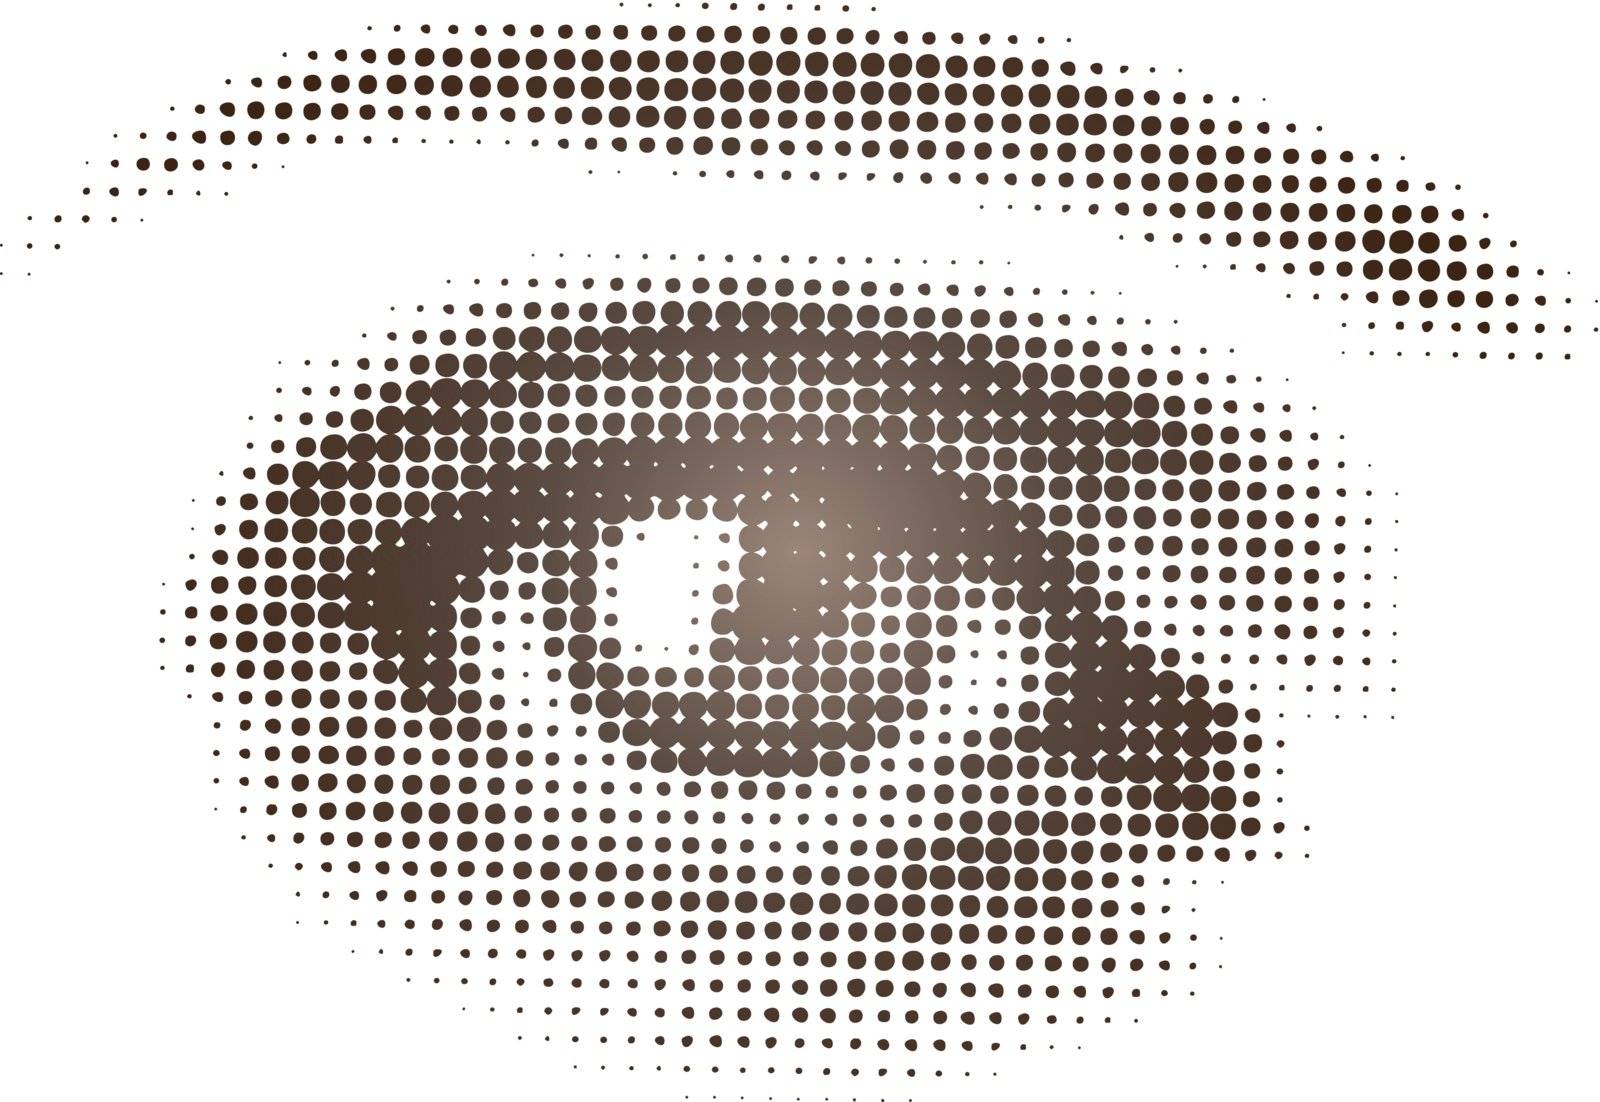 Watching Eye by HypnoCreative